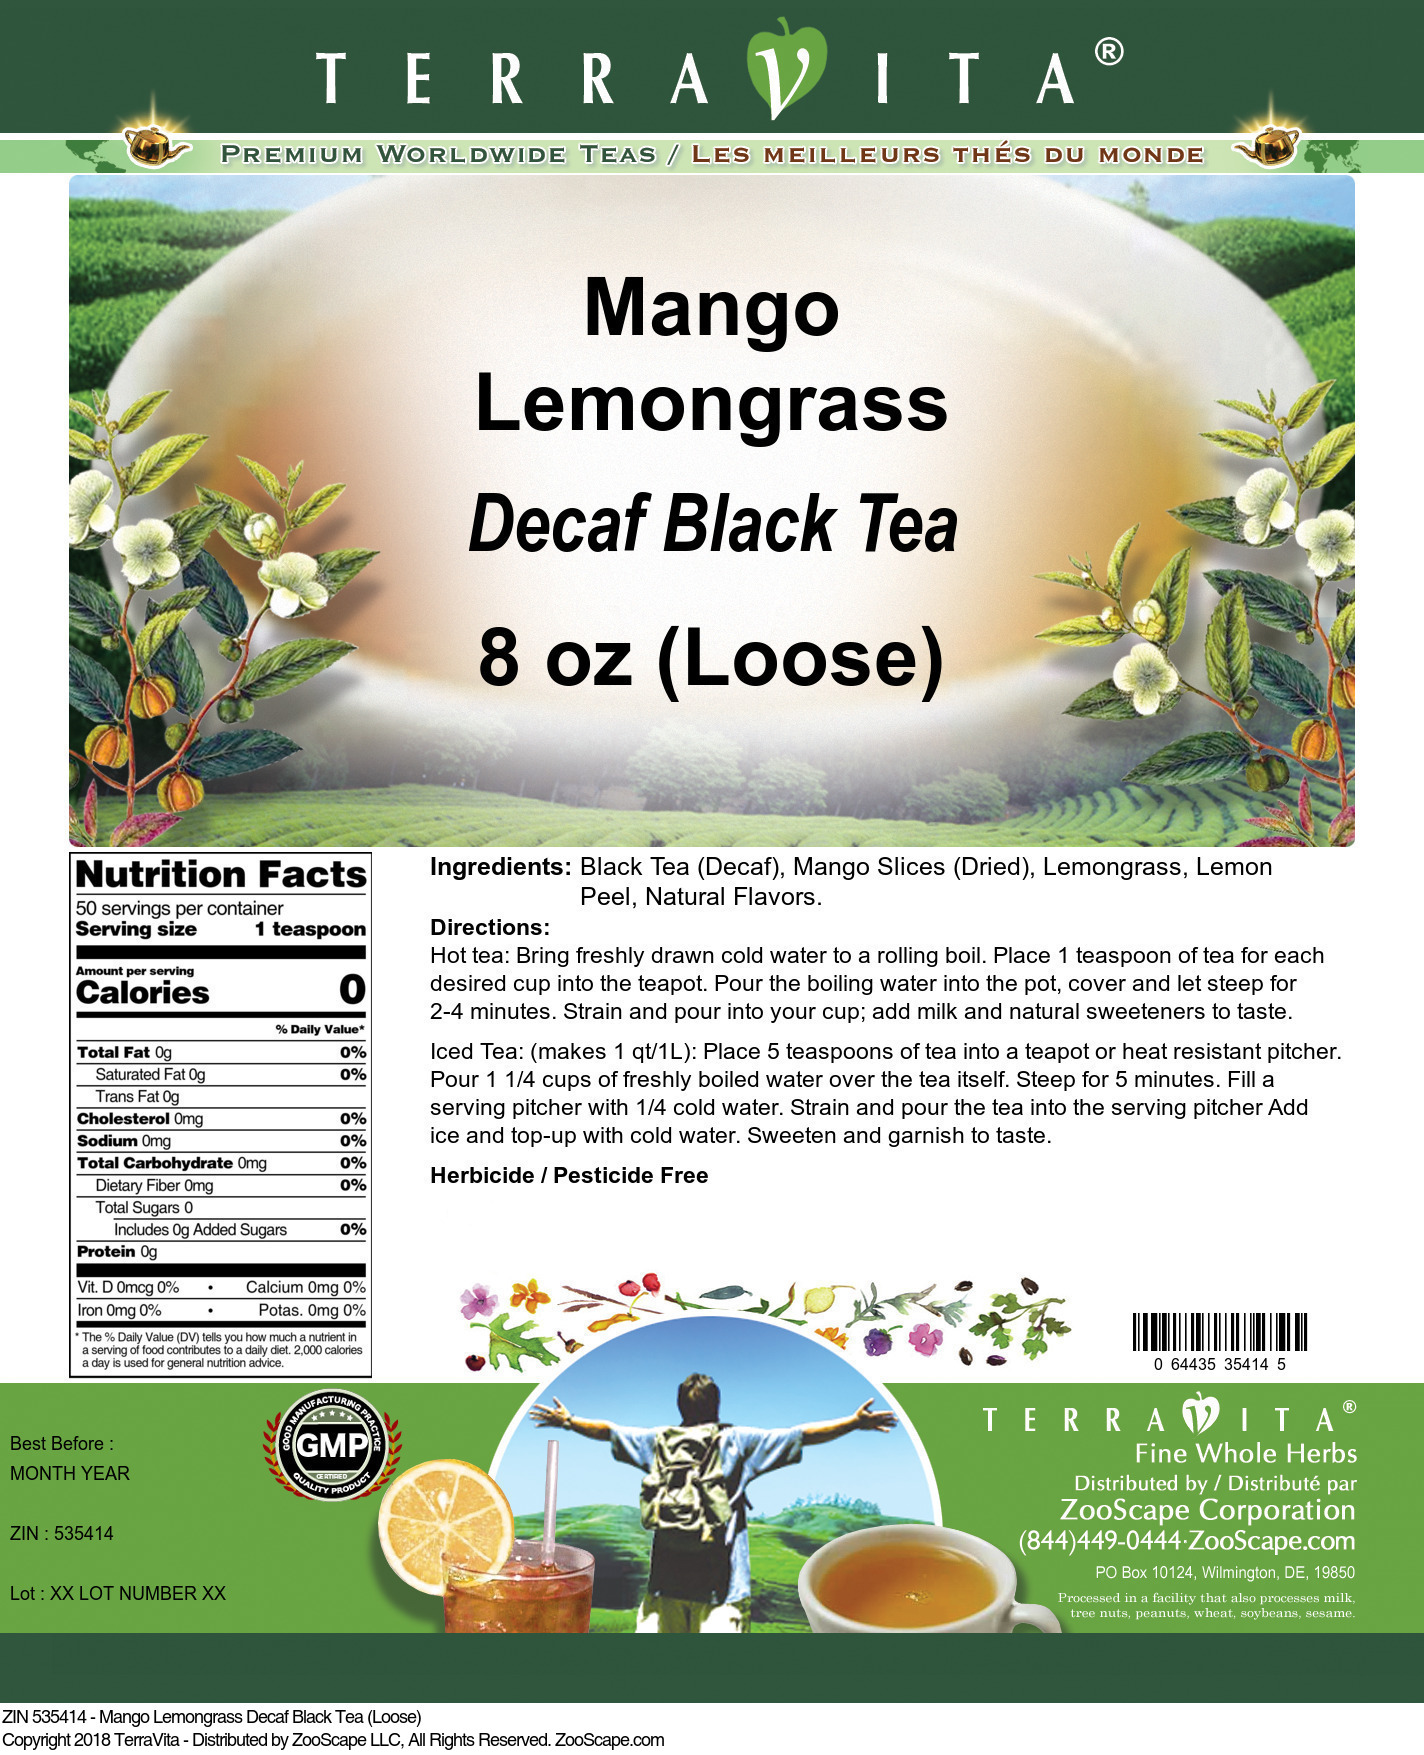 Mango Lemongrass Decaf Black Tea (Loose) - Label